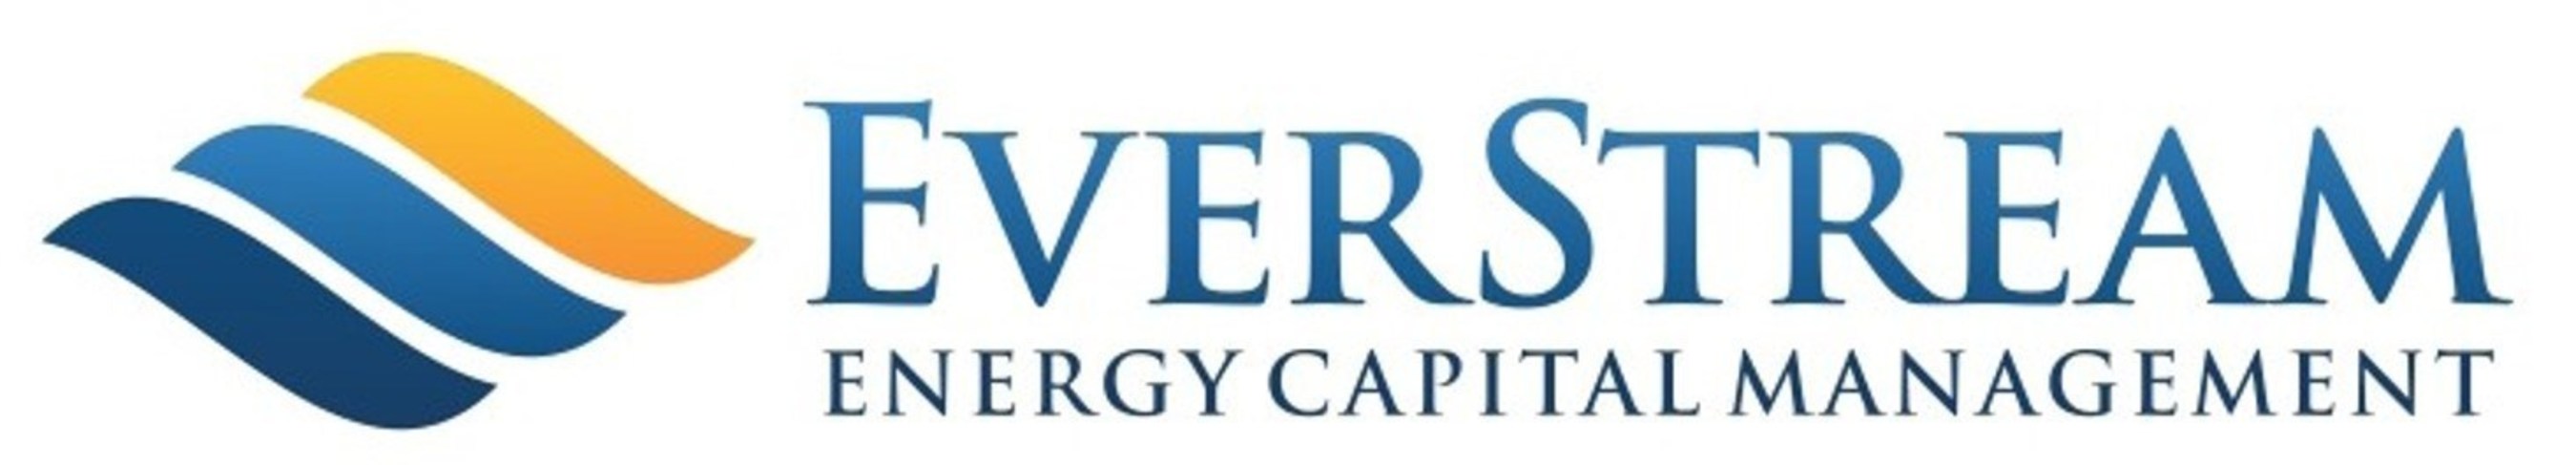 EverStream Energy Capital Management (PRNewsFoto/EverStream Capital Management...)